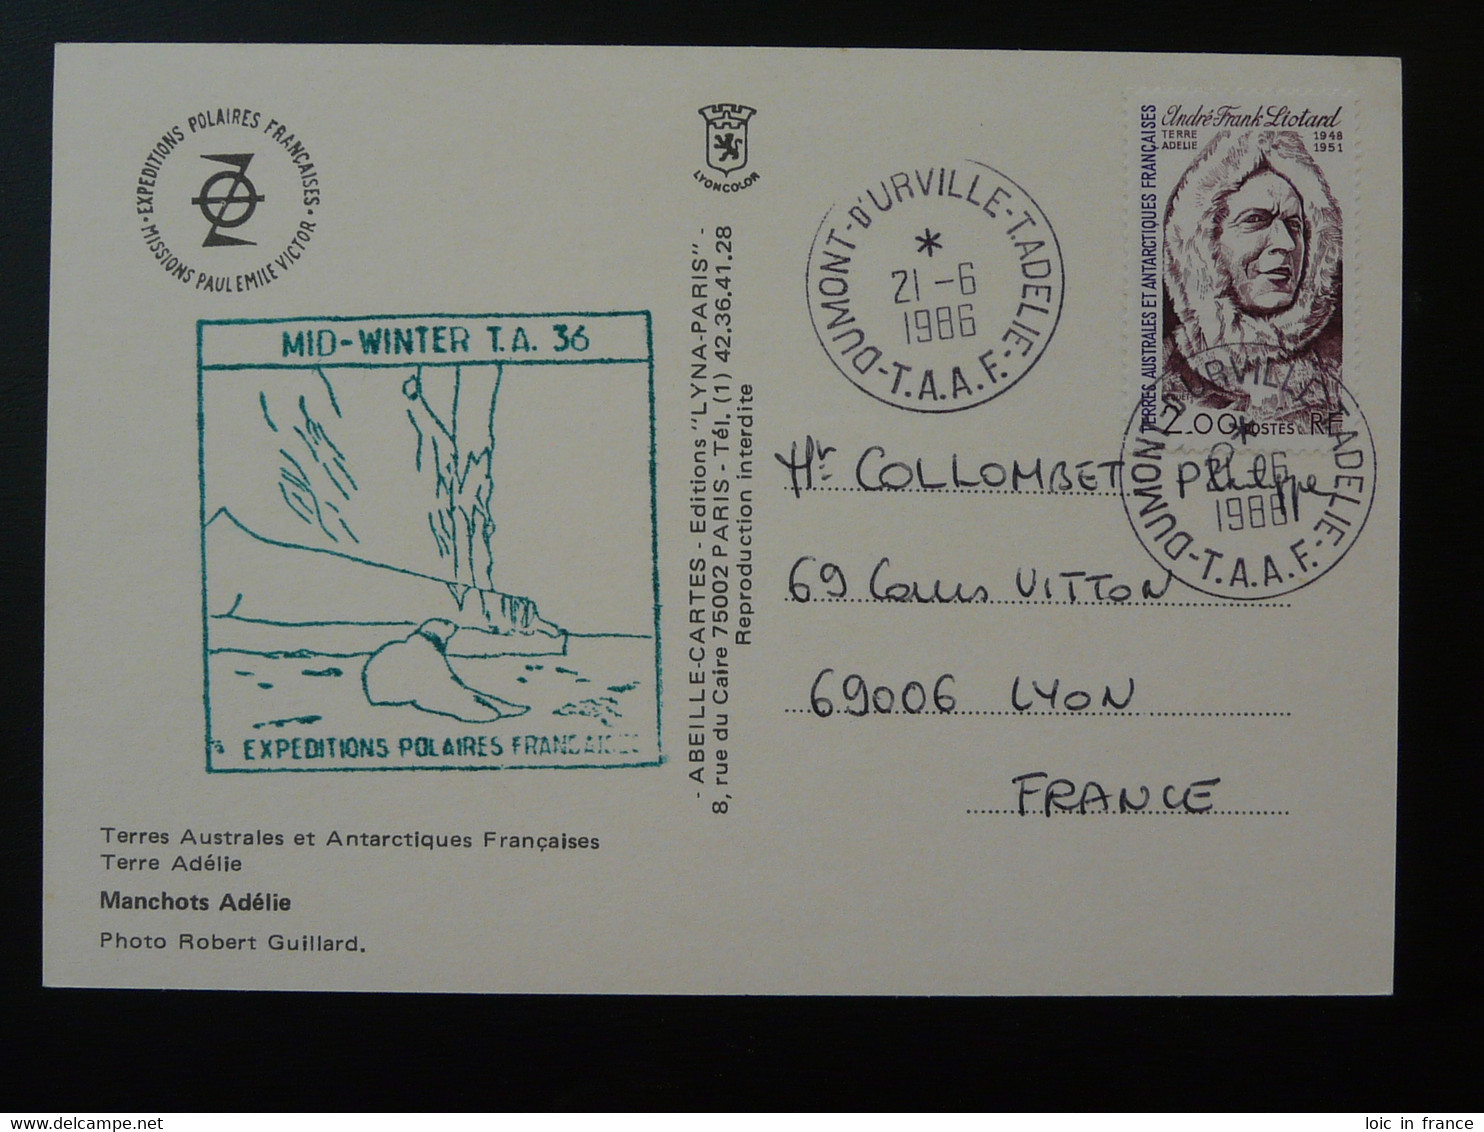 Carte Postale Expéditions Polaires Paul Emile Victor Midwinter 1986 TAAF - Midwinter